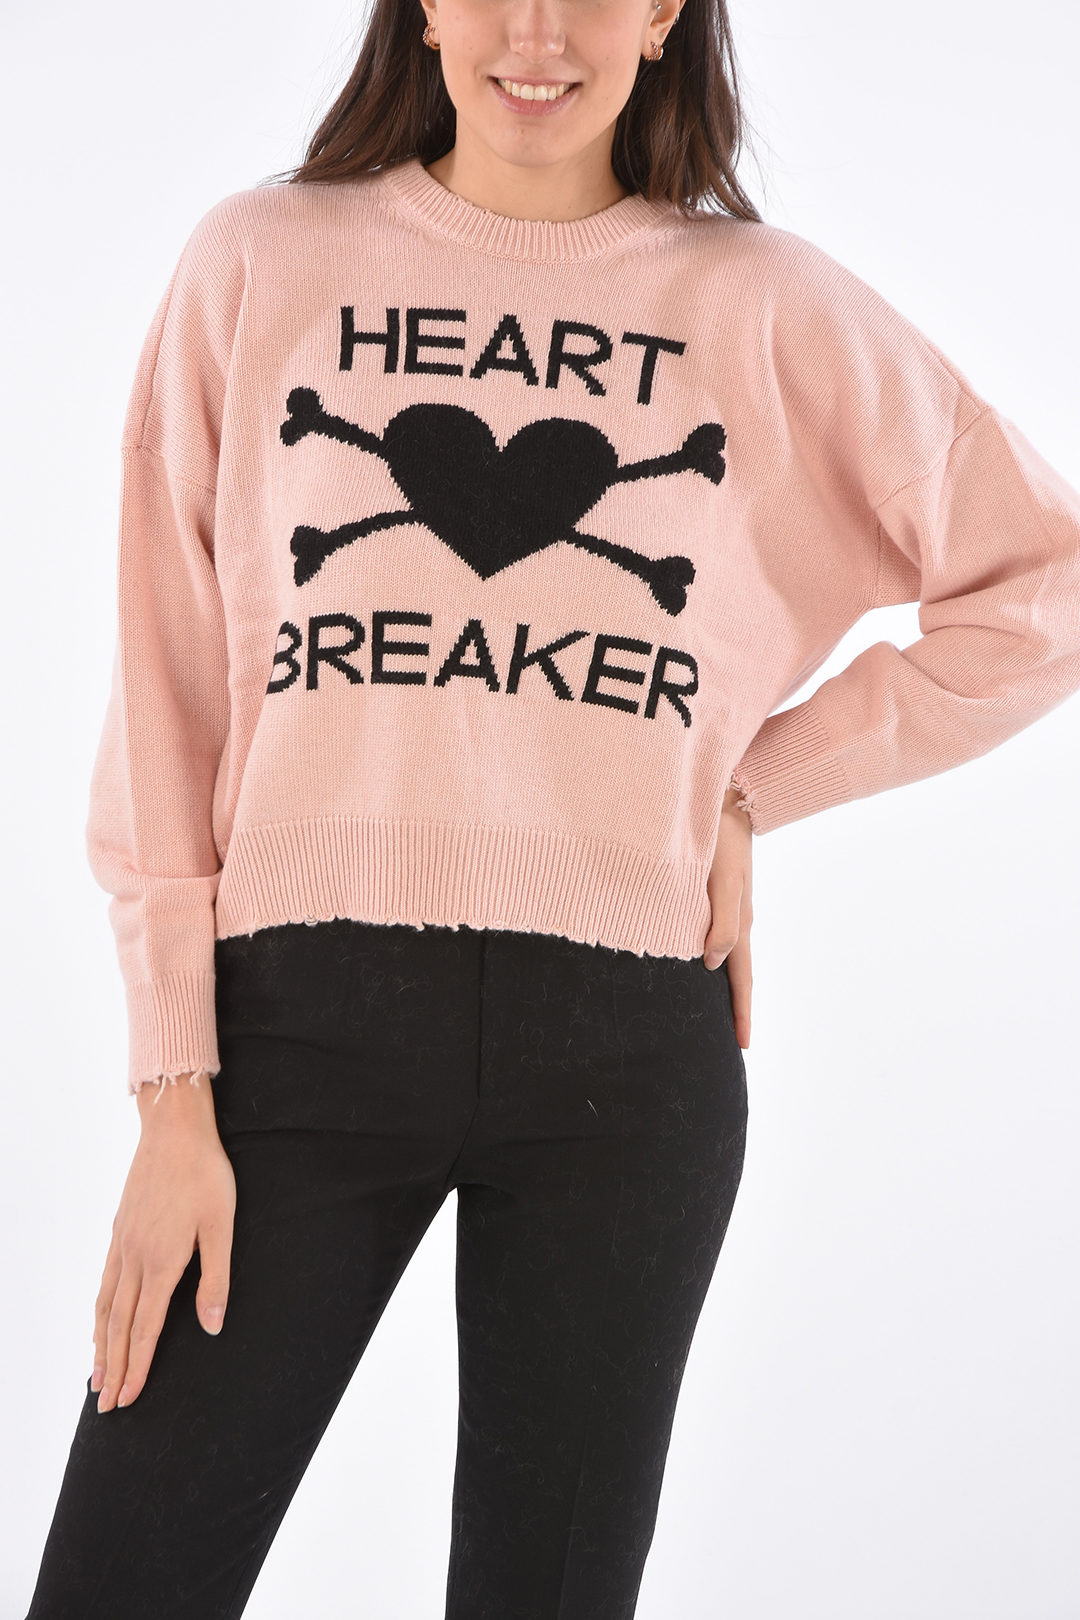 Kapitein Brie Ver weg Druif Red Valentino Ripped HEART BREAKER Sweater women - Glamood Outlet